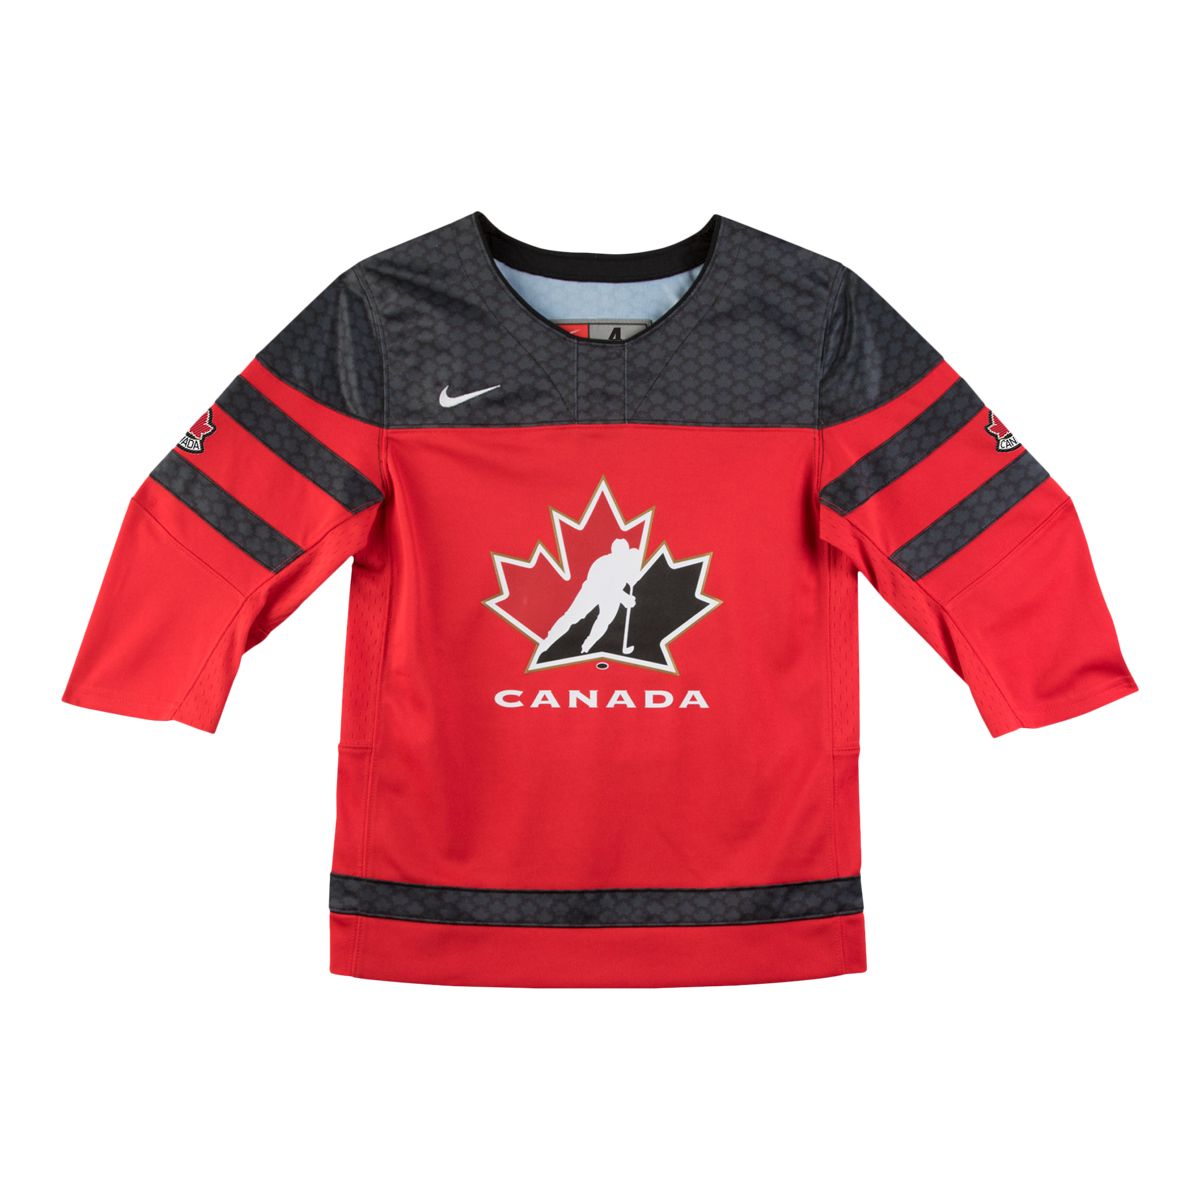 Image of Team Canada Nike Toddler Hockey Jersey